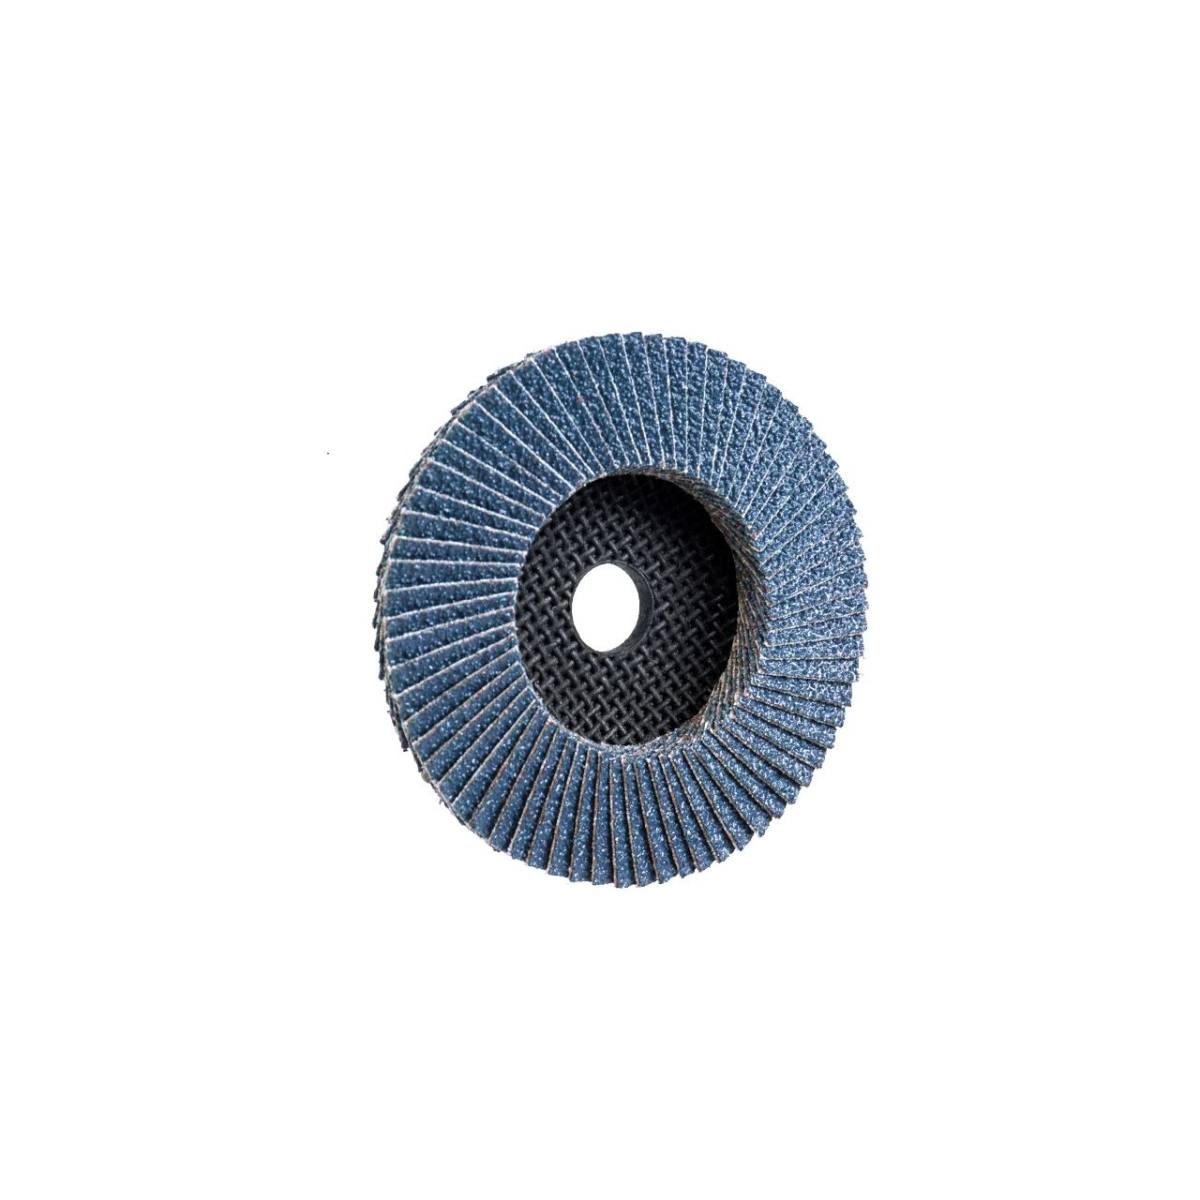 TRIMFIX ZIRCOPUR, 100 mm x 16,0 mm, grano 120, disco de láminas